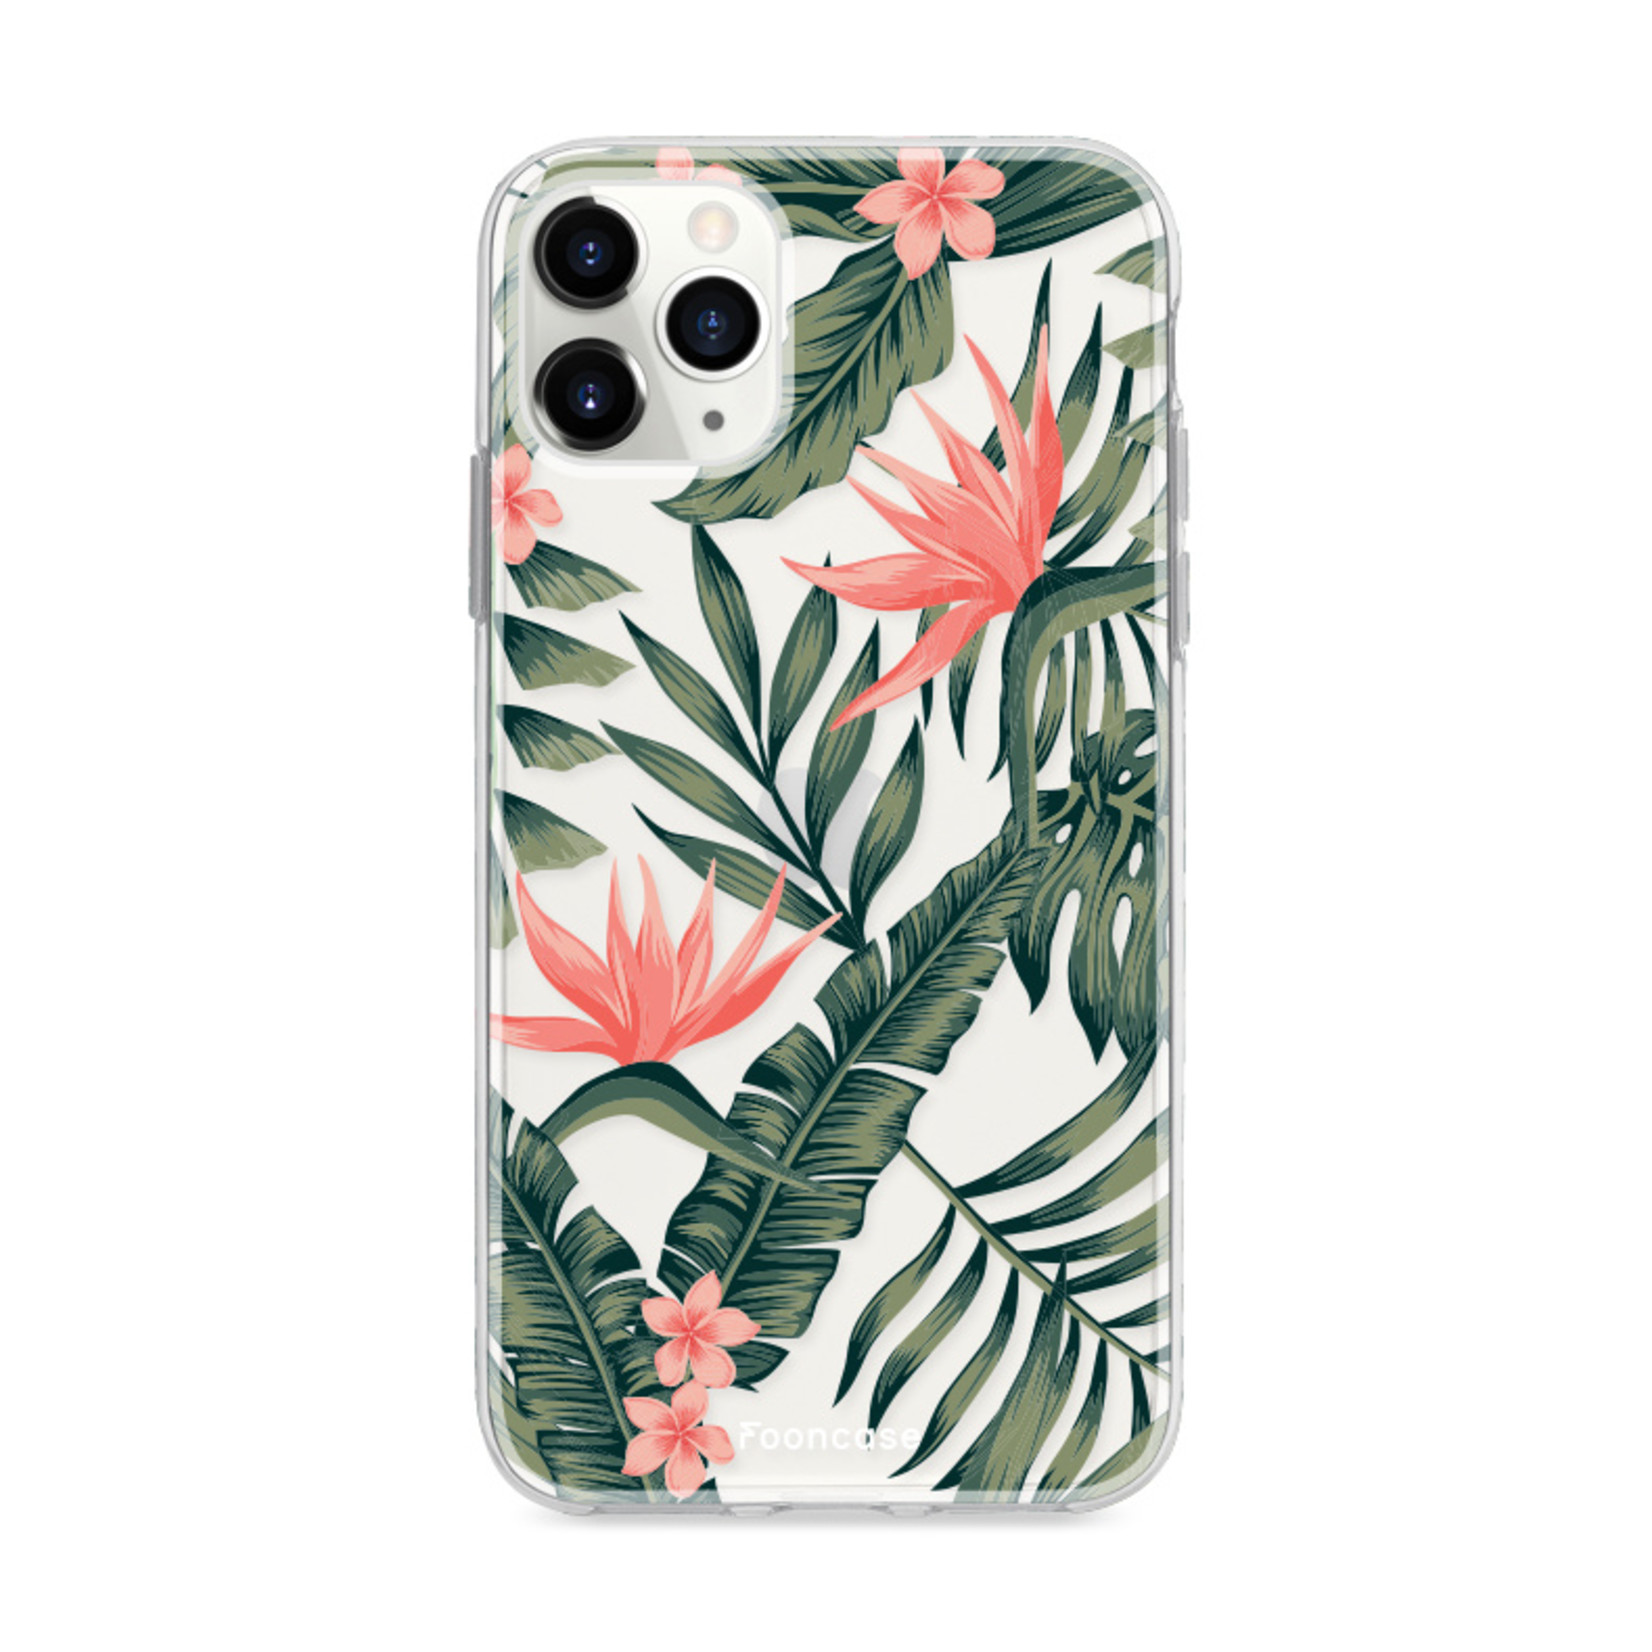 FOONCASE iPhone 12 Pro Max hoesje TPU Soft Case - Back Cover - Tropical Desire / Bladeren / Roze